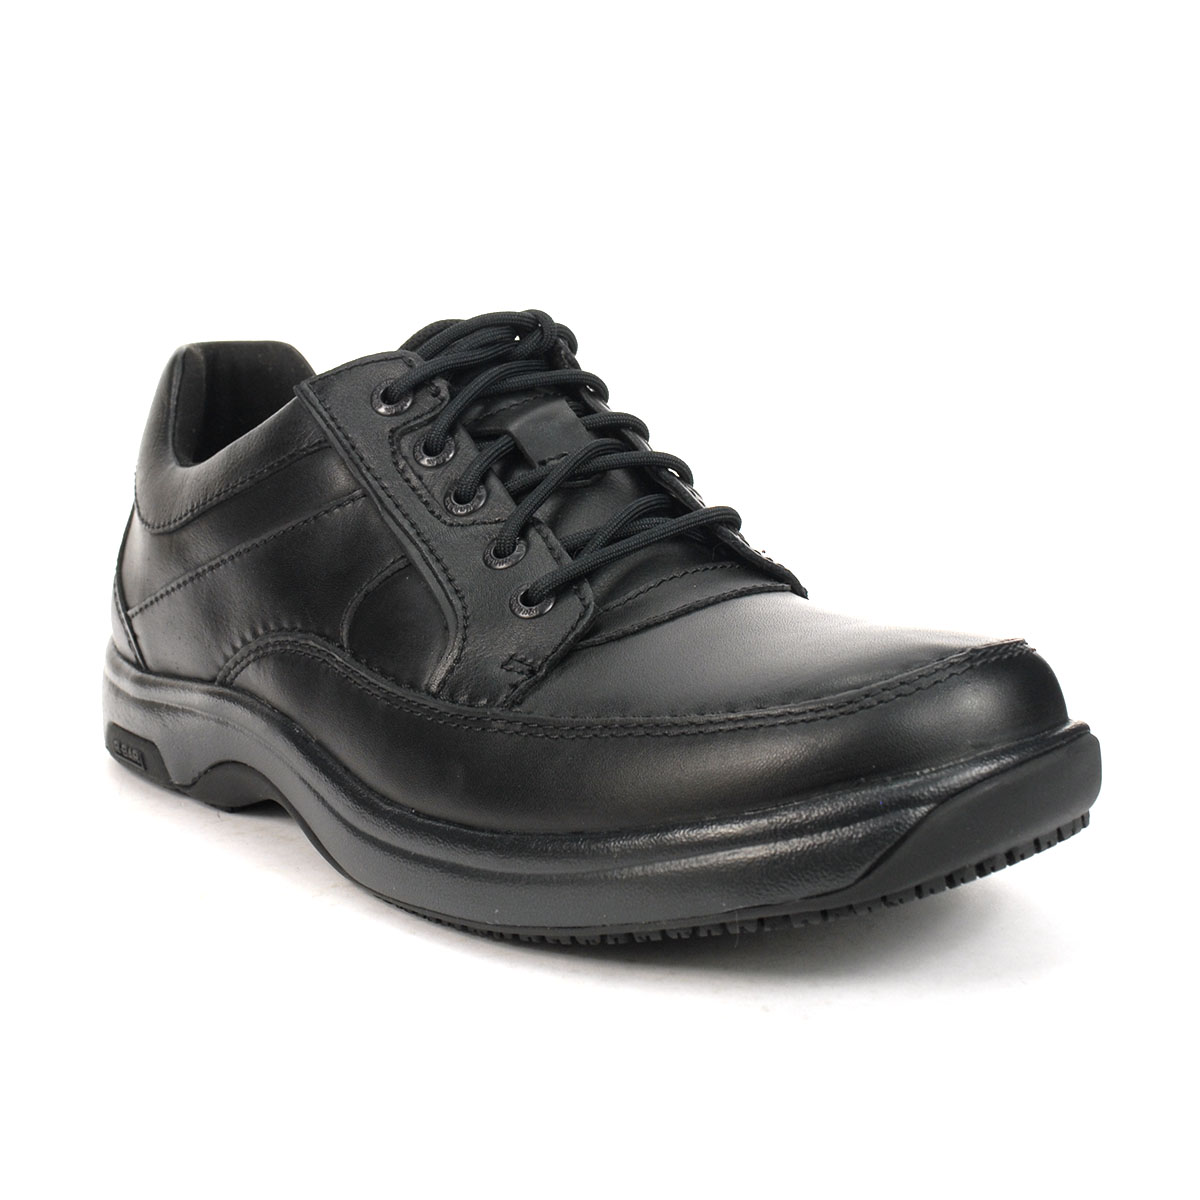 Dunham Men's 8000 Service Midland Black Shoes CH4763 - WOOKI.COM